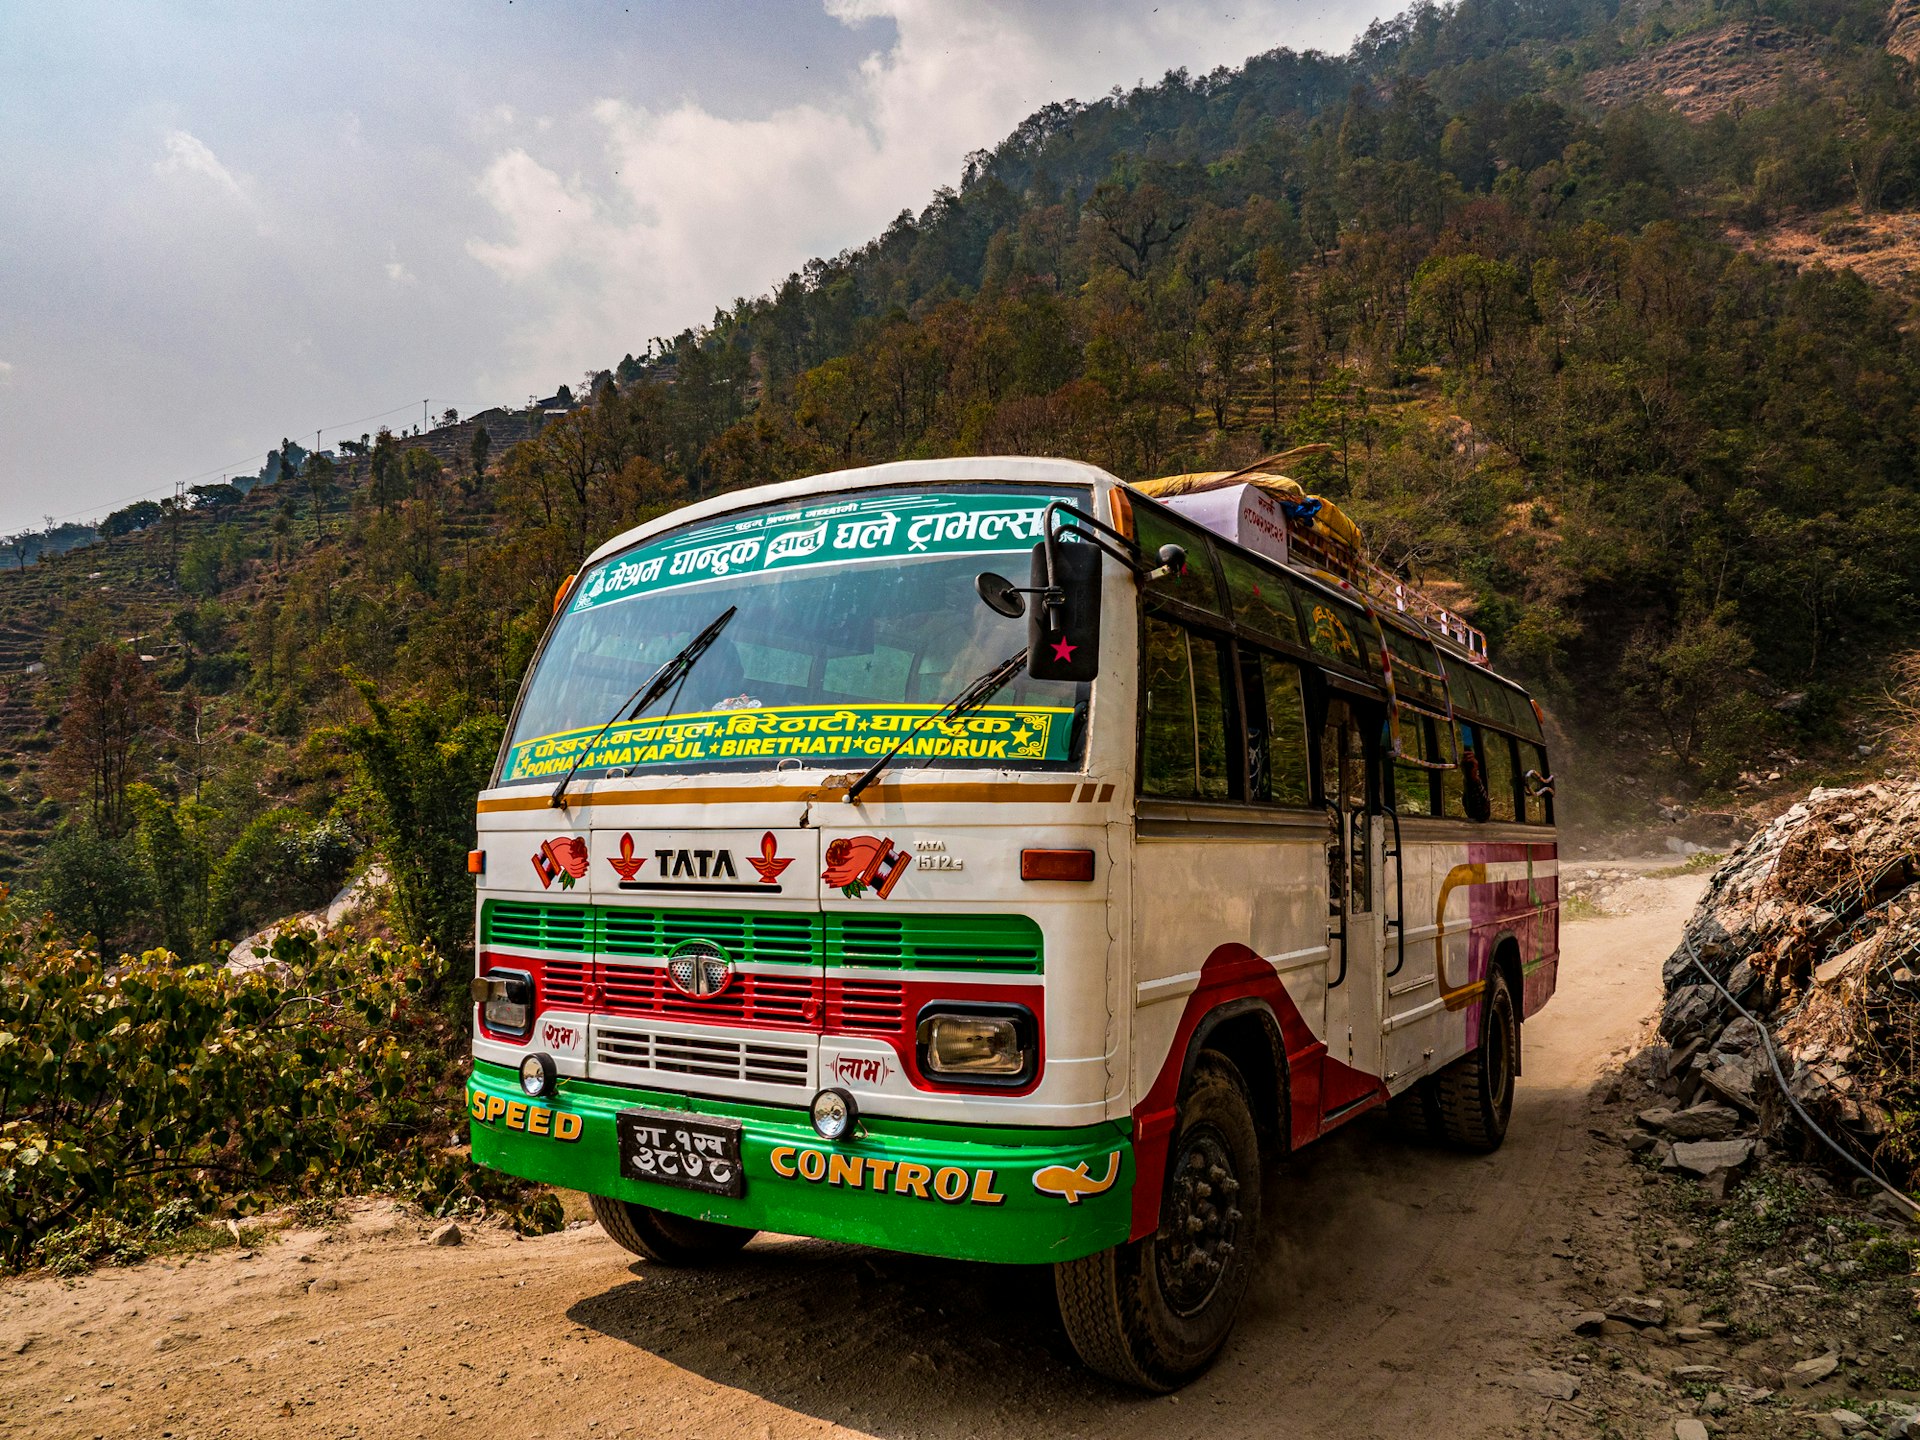 A local Nepali bus in the Annapurna region near Pokhara